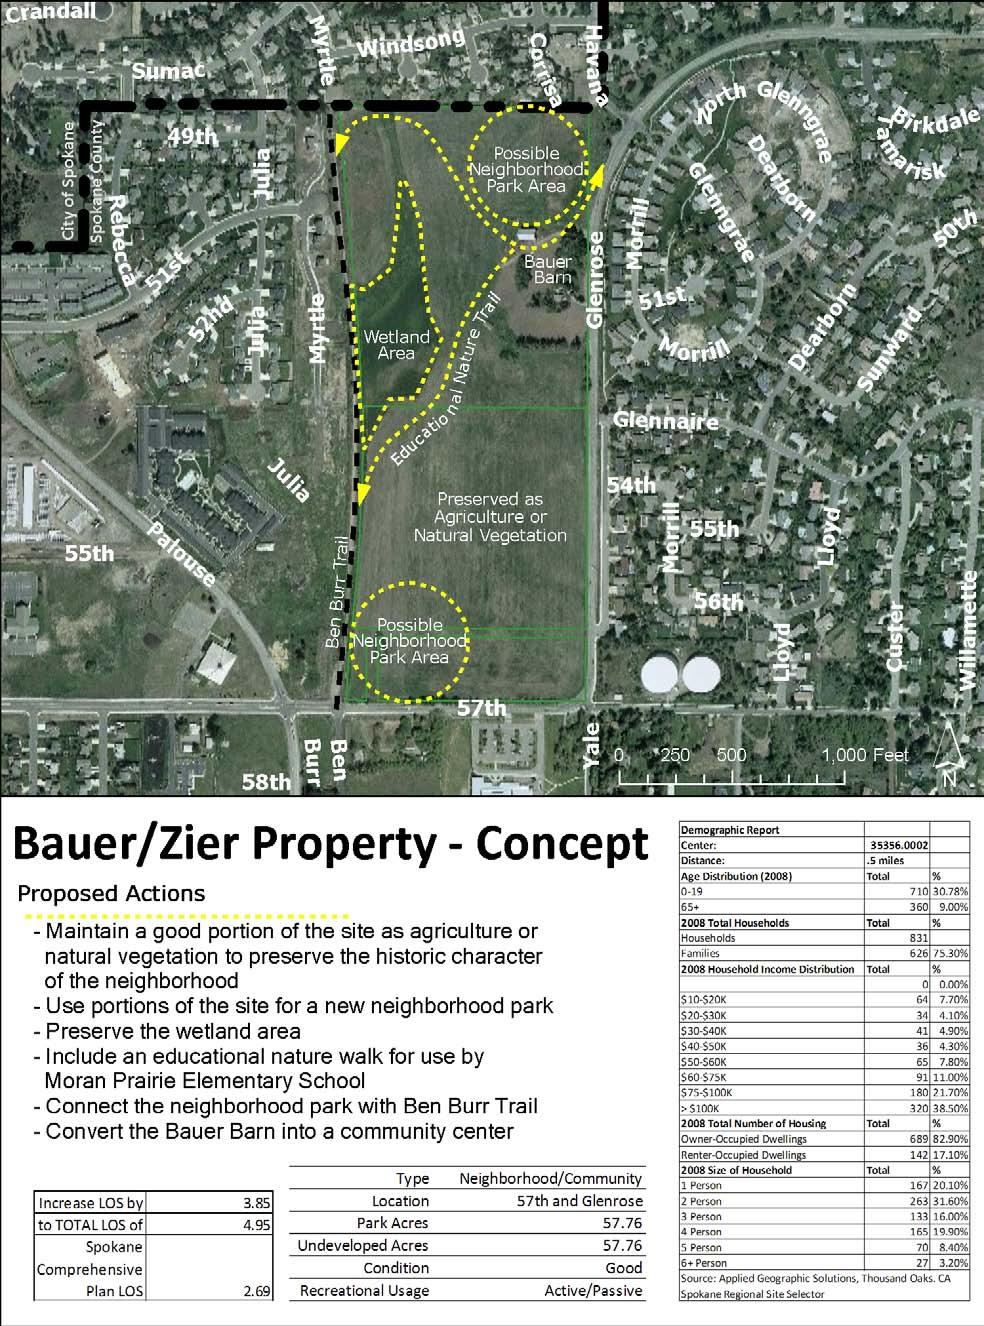 Figure 34 Bauer/Zier Property Improvement Concept - Source: